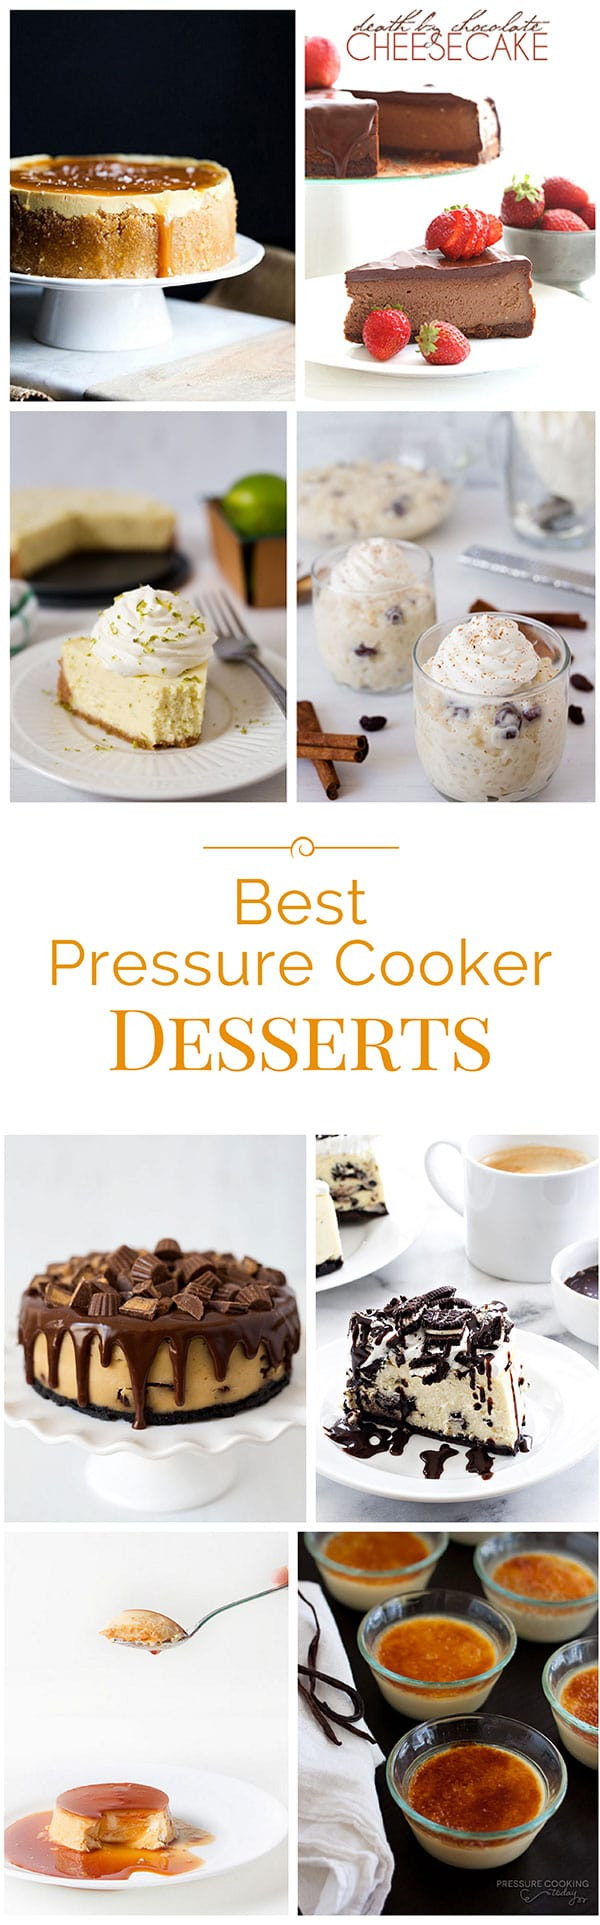 Pressure Cooker Desserts Recipes
 Best Instant Pot Pressure Cooker Desserts Recipes